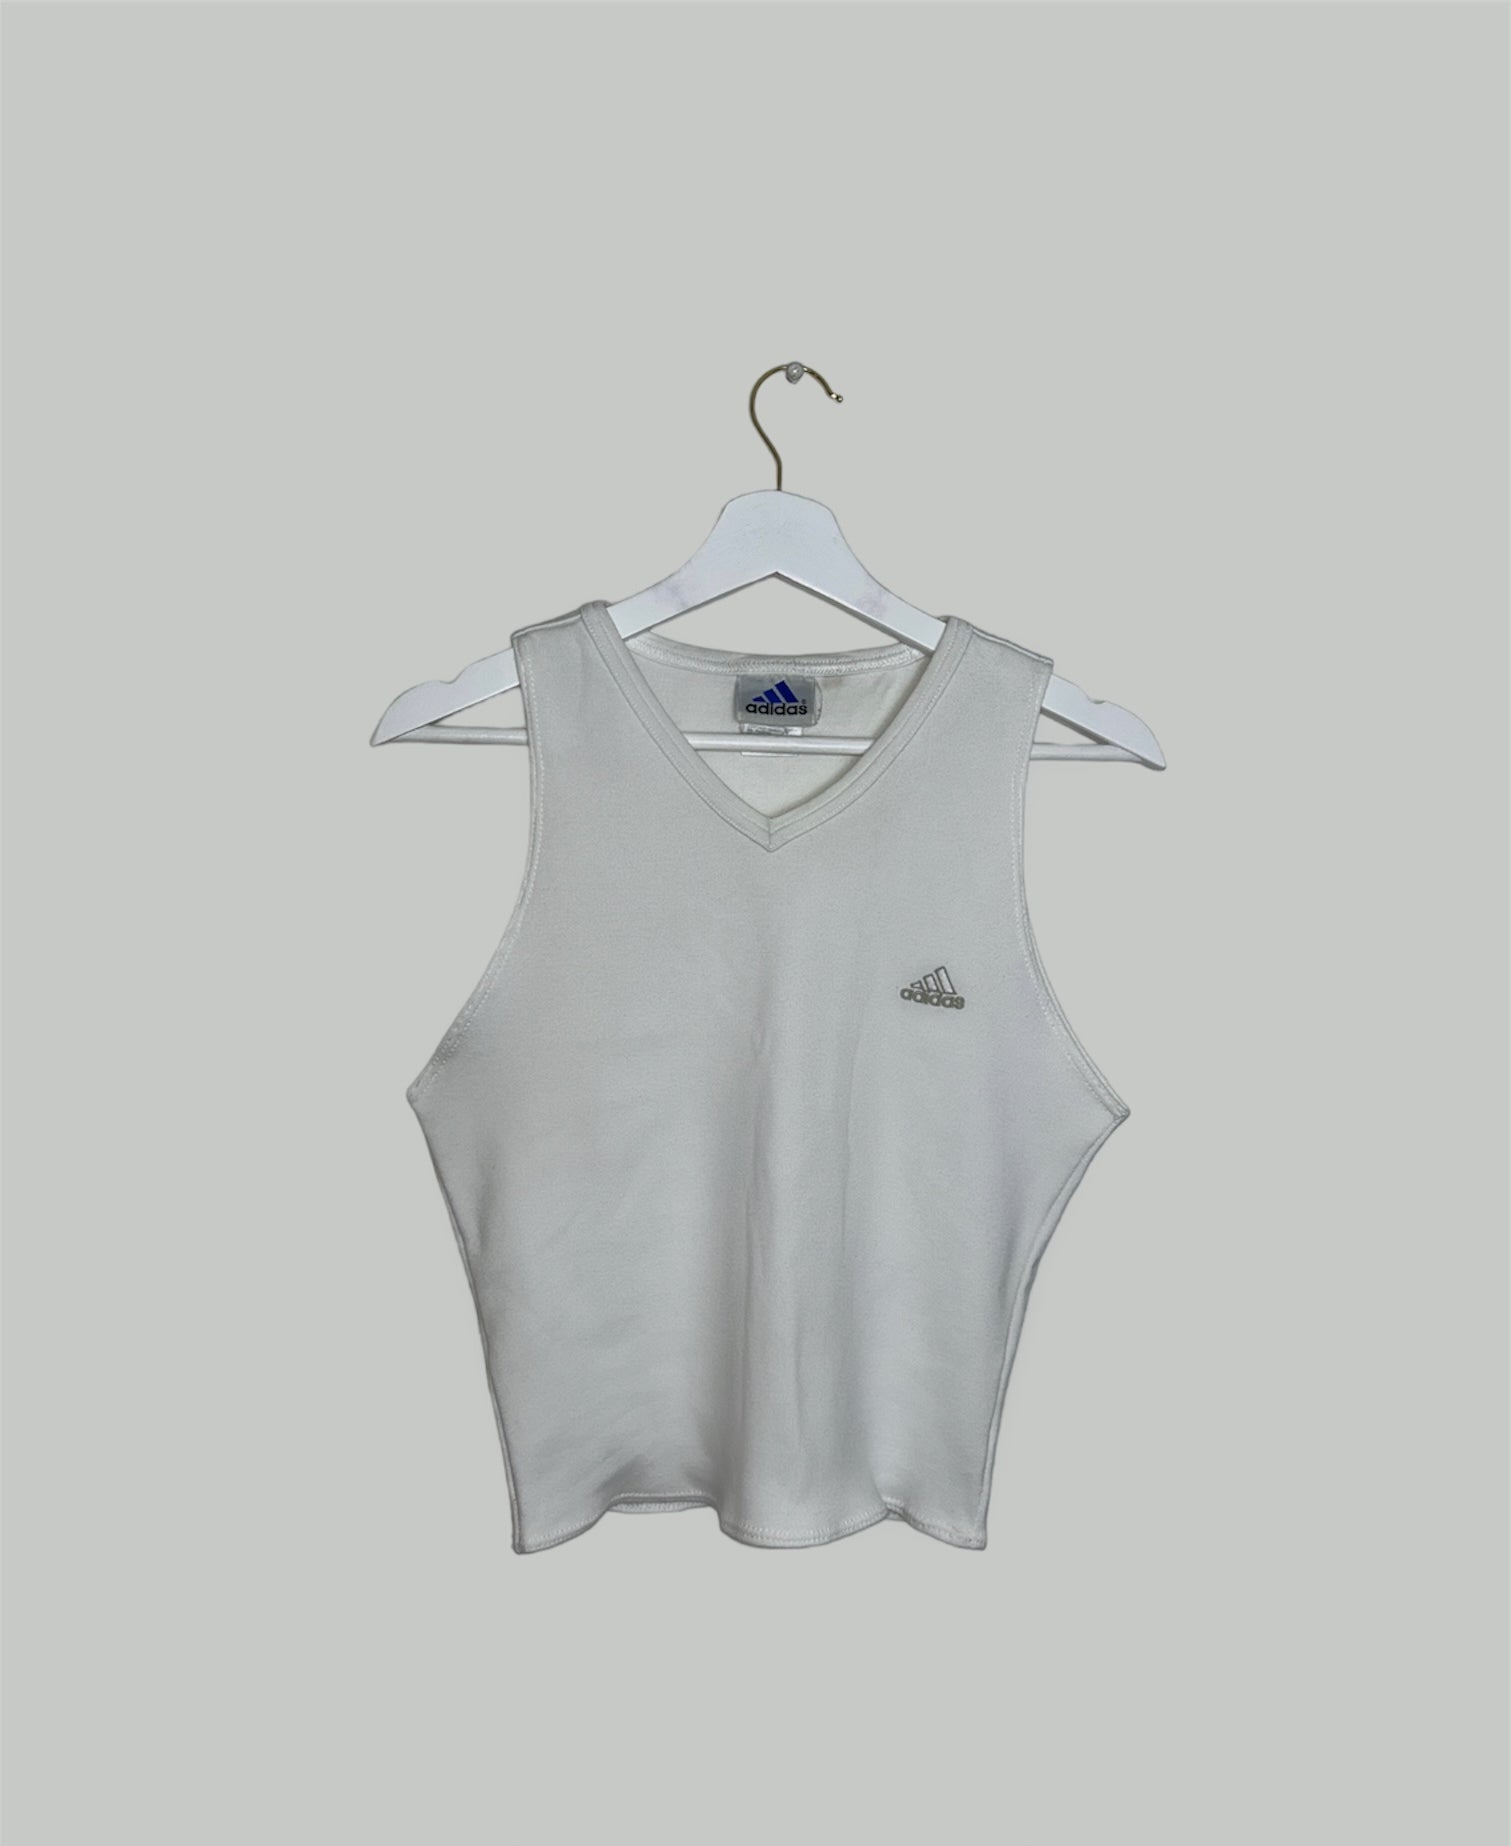 white sleeveless crop top with grey adidas logo